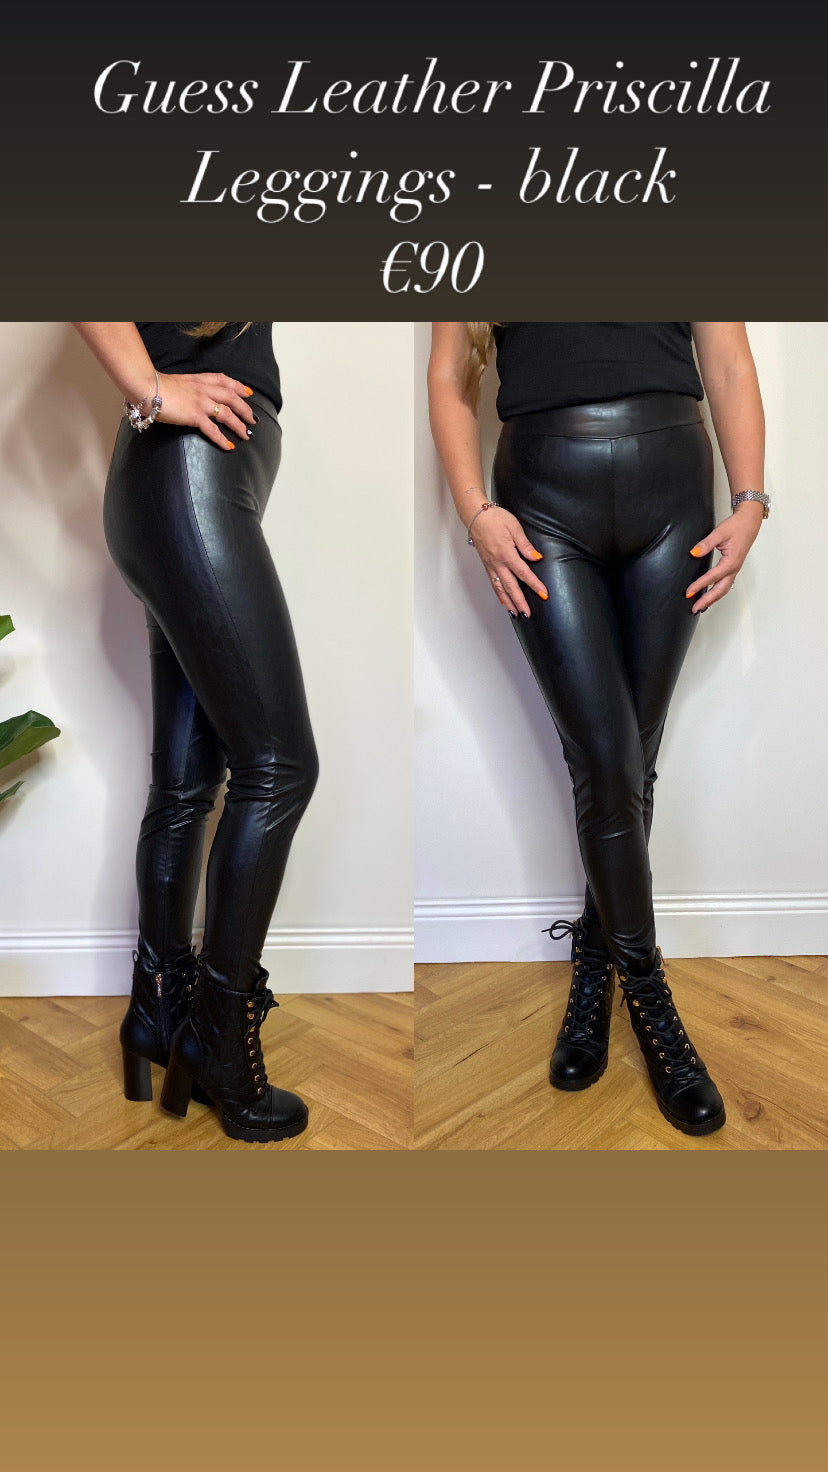 Guess Leather Priscilla Leggings - black — Therapy Boutique